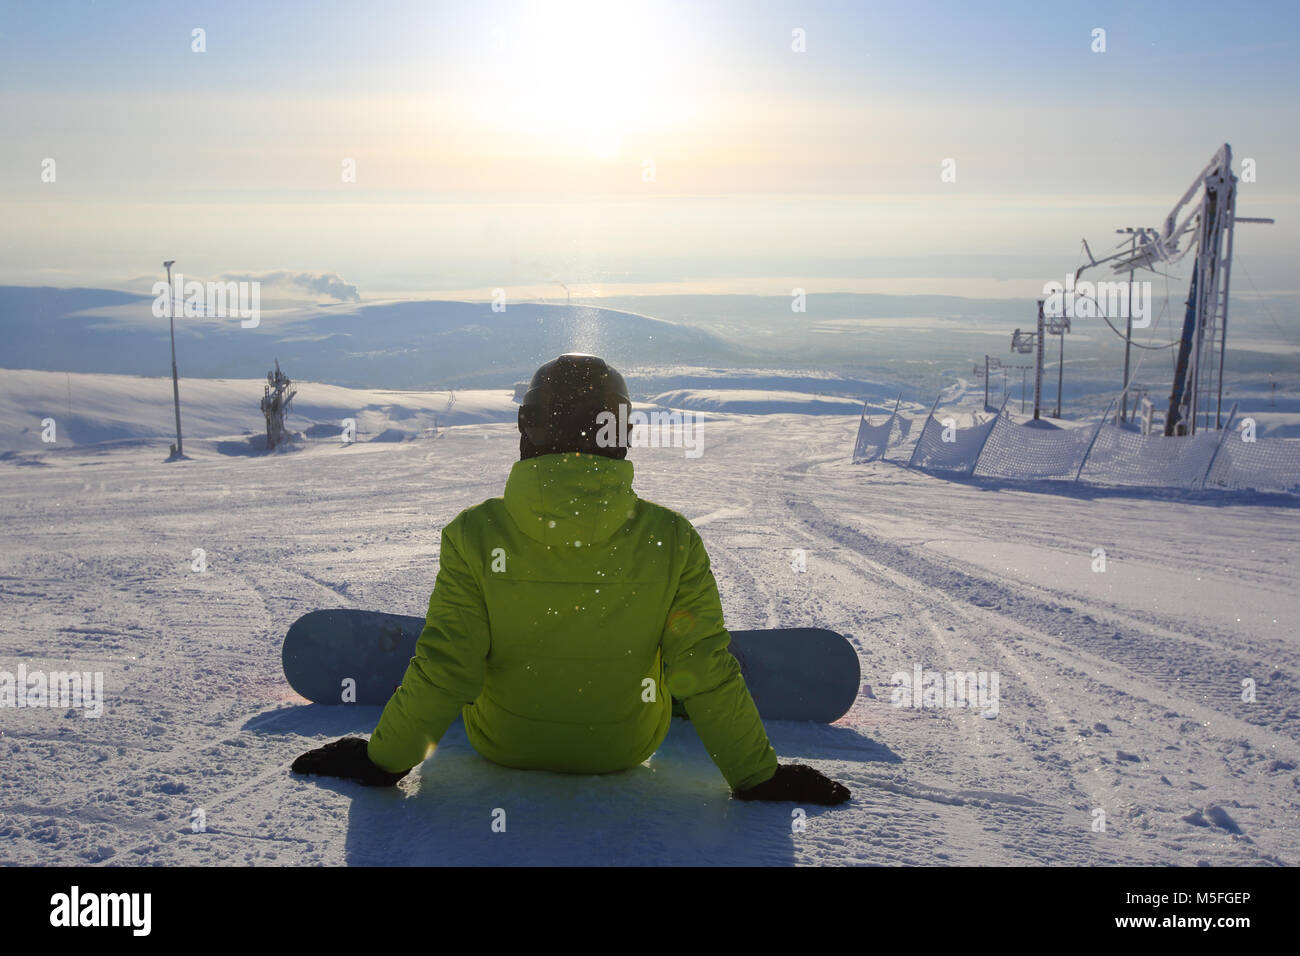 Snowboarder sitting on snow slope of ski resort, rear view Stock Photo